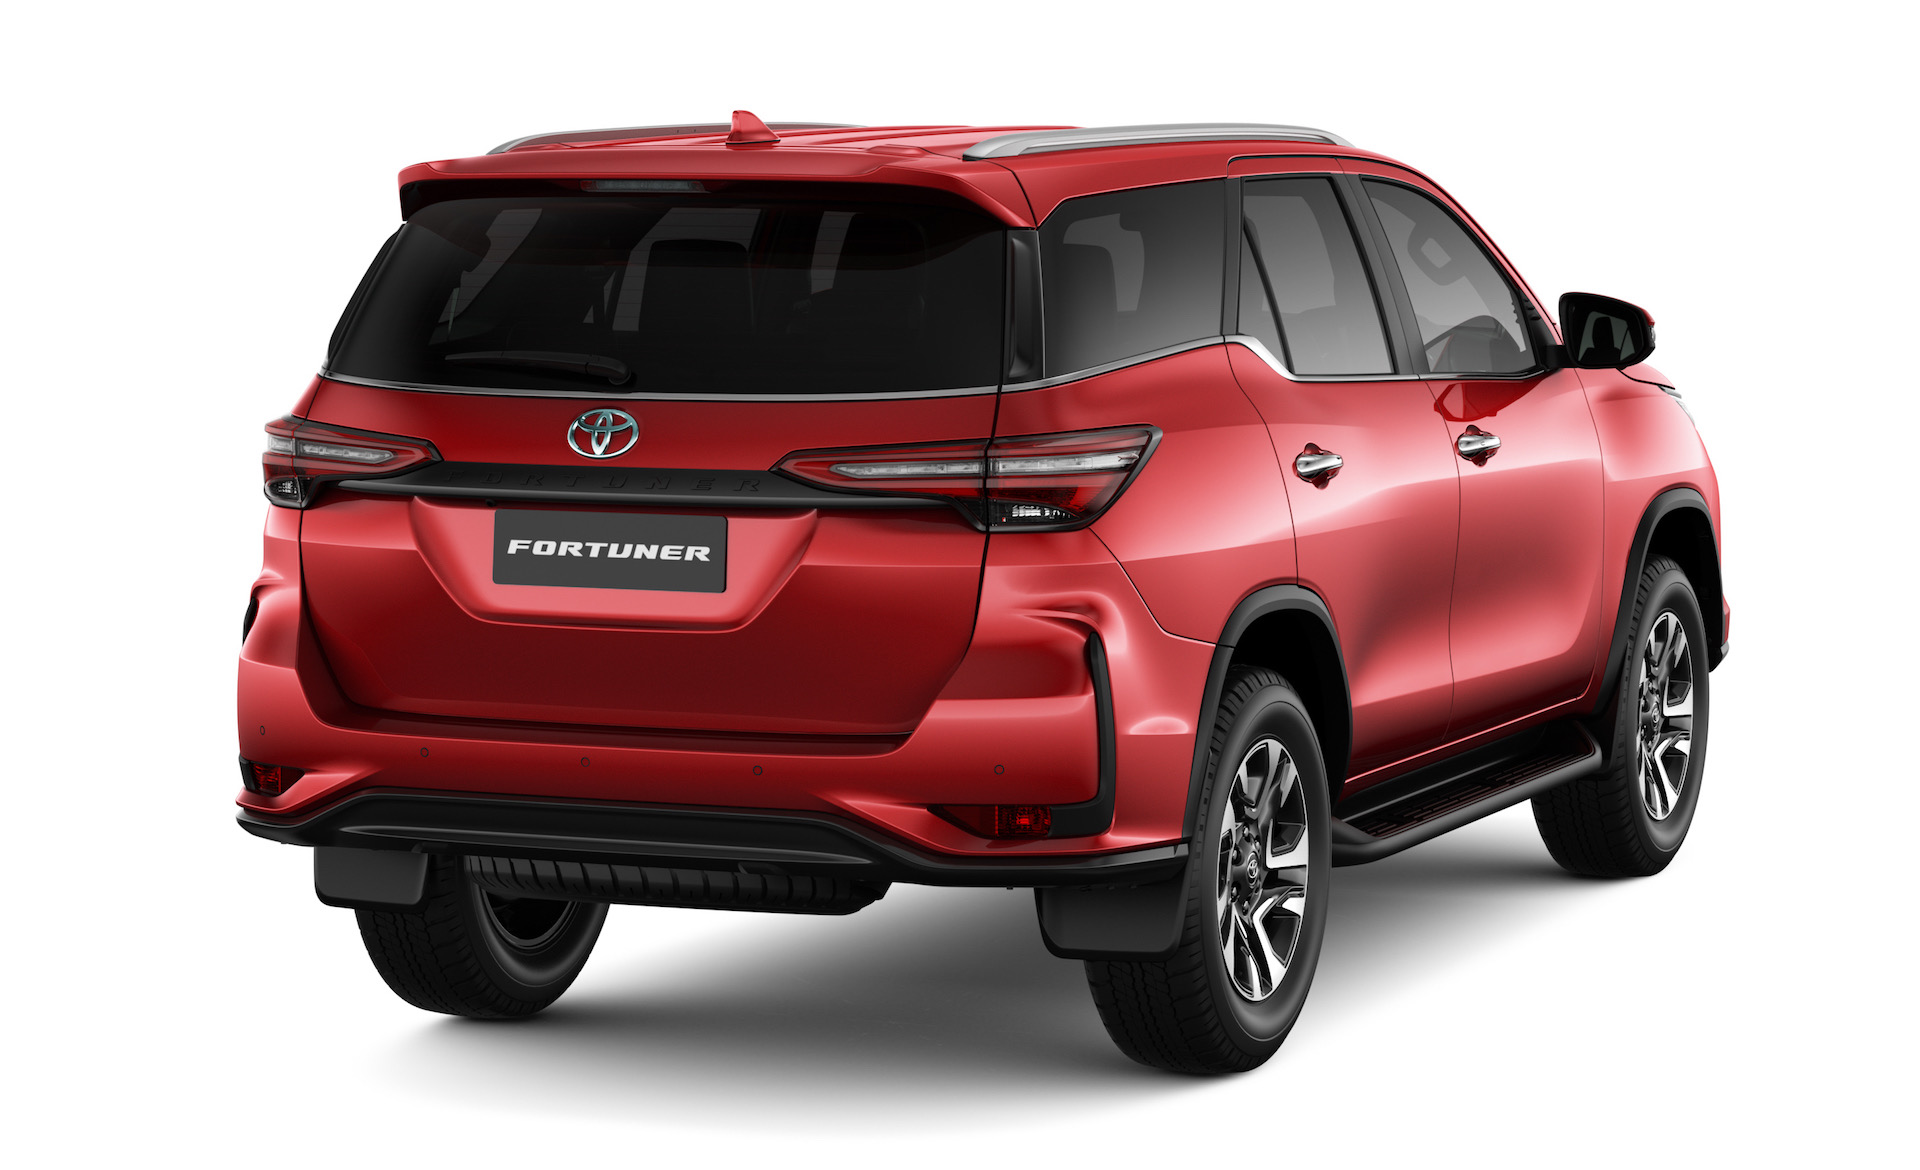 2021 Toyota Fortuner gets sharpened design, more power - PerformanceDrive